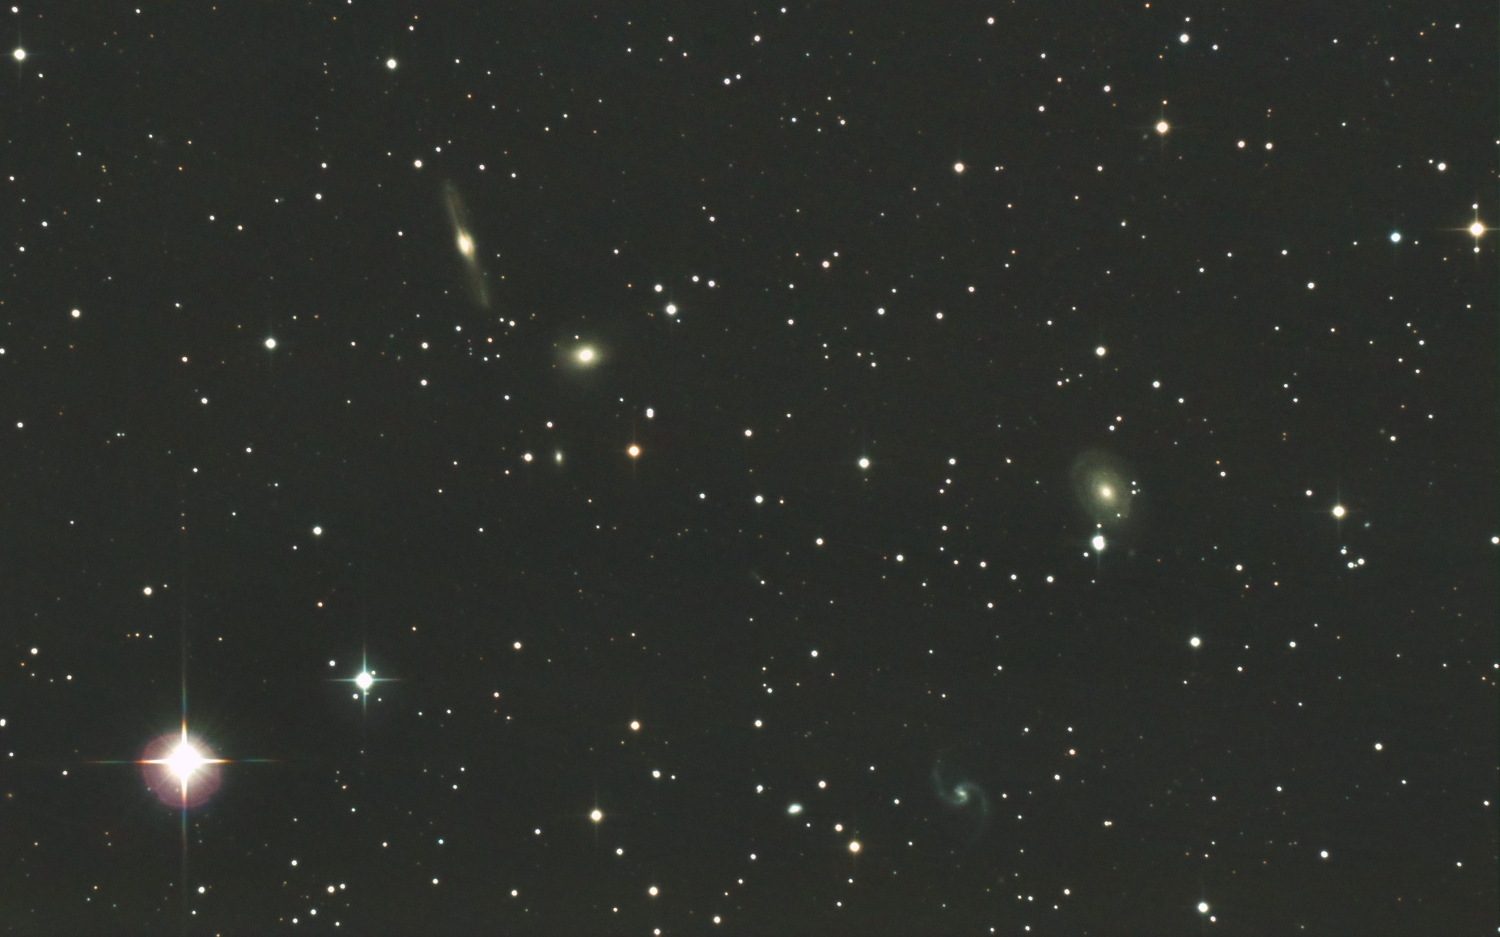 Group of Galaxies in Aries